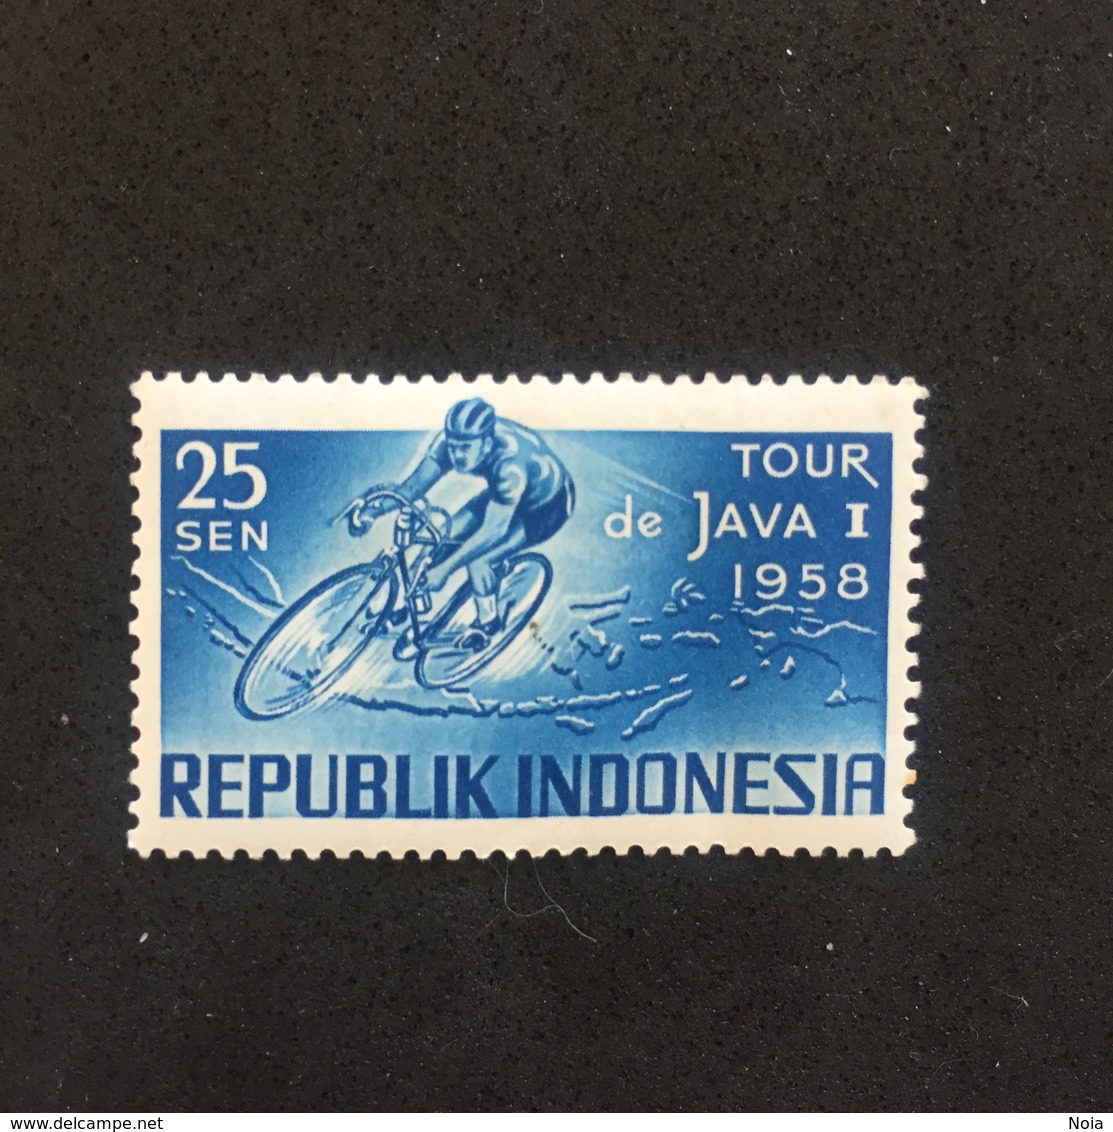 INDONESIA. JAVA TOUR 1958. MNH. C3703A - Cyclisme